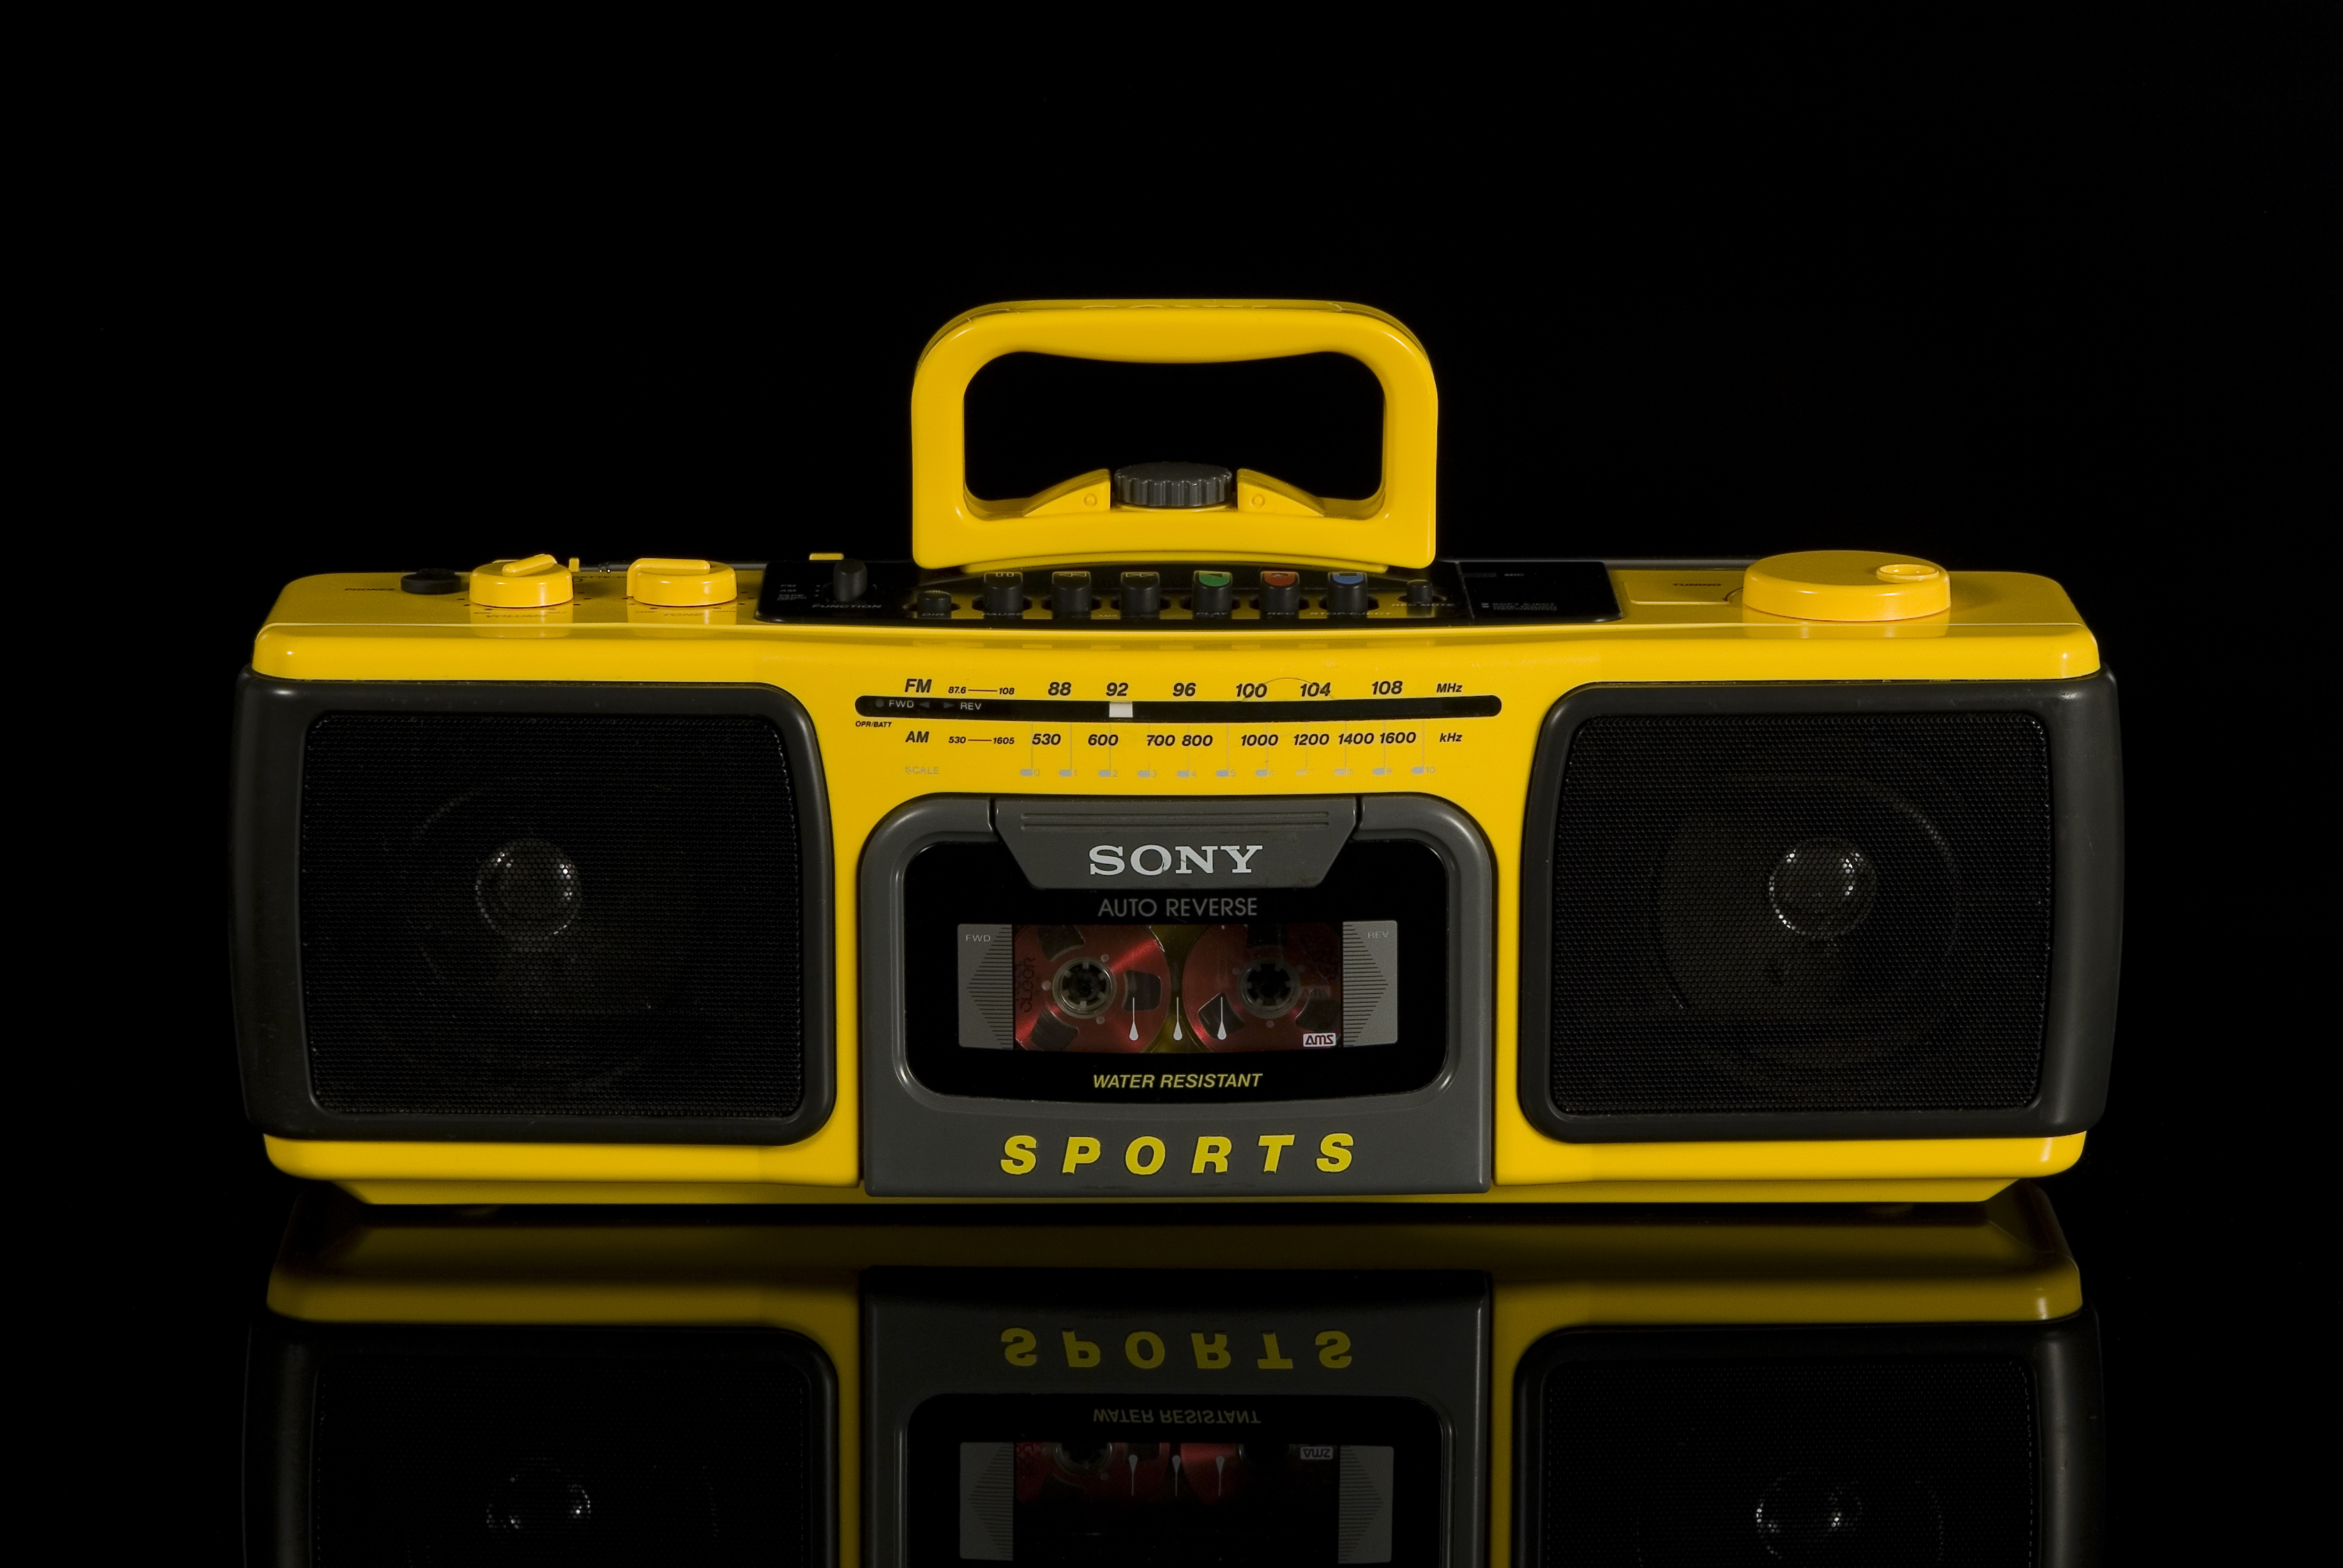 Ретро магнитофон. Желтый кассетный магнитофон сони. Sony cfs930. Винтажная техника Бумбокс сони 90х. Магнитофон Sony 1200.